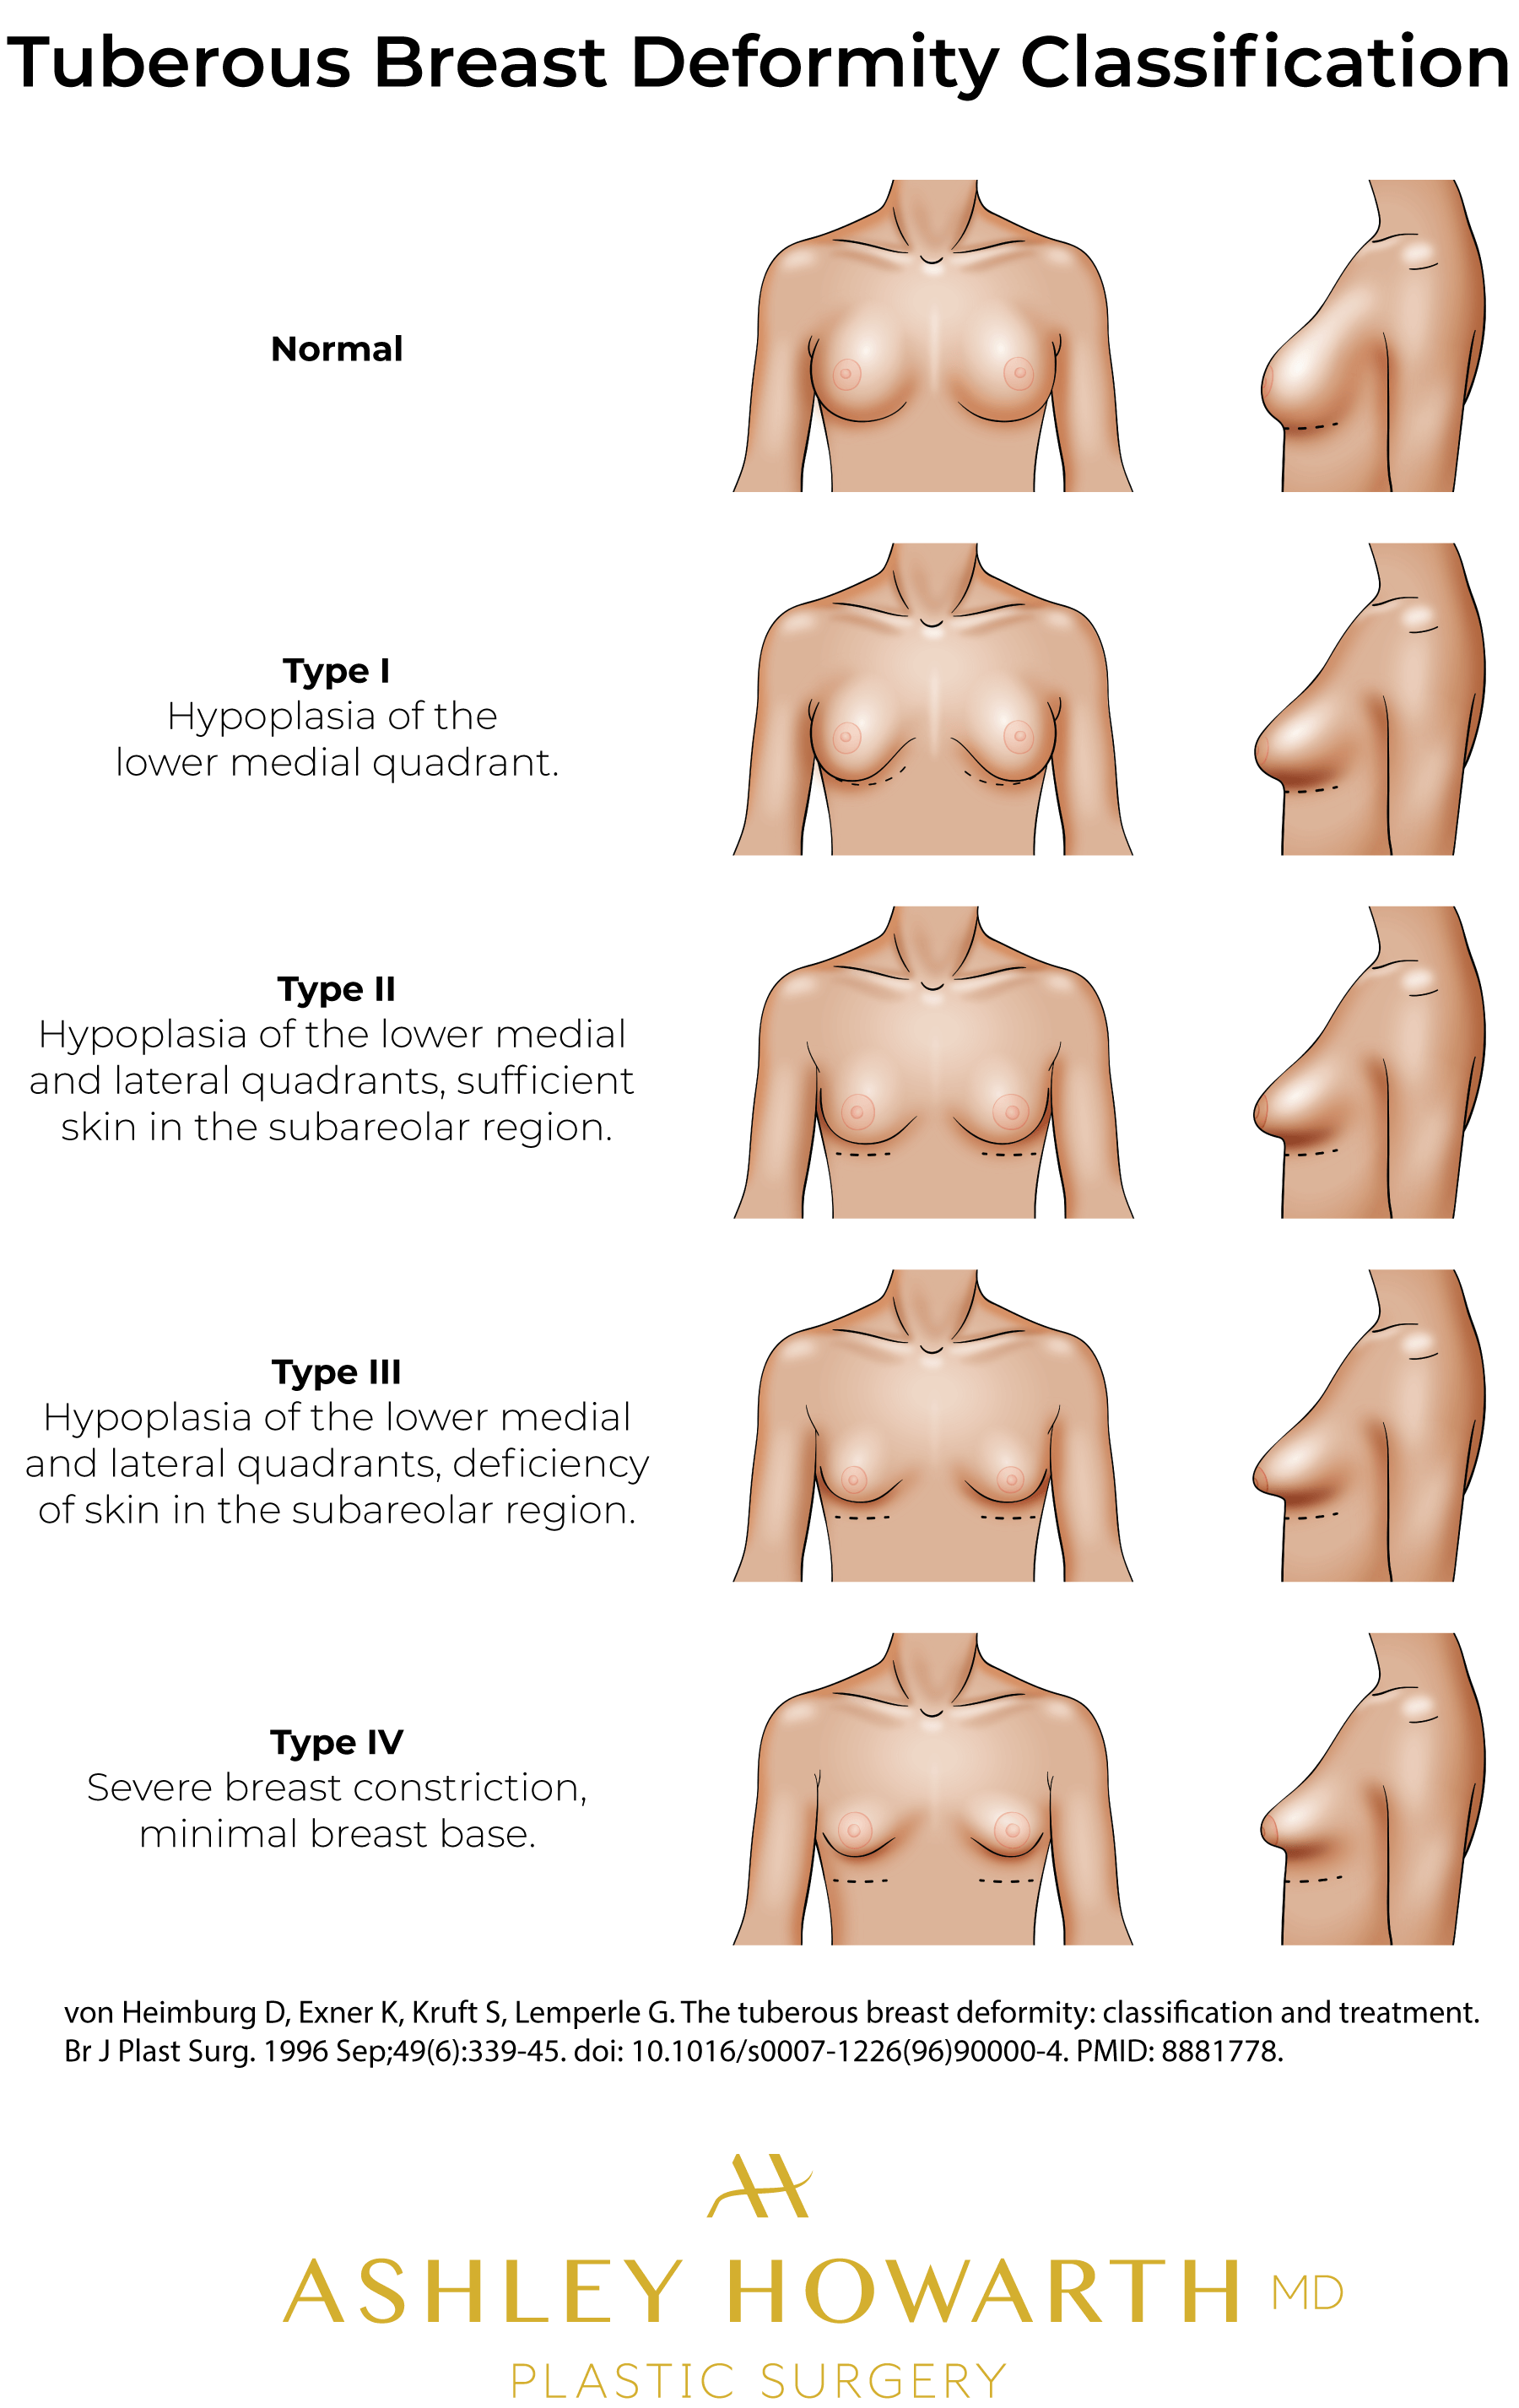 Tubular Breasts - Tuberous Breast Deformity Classification